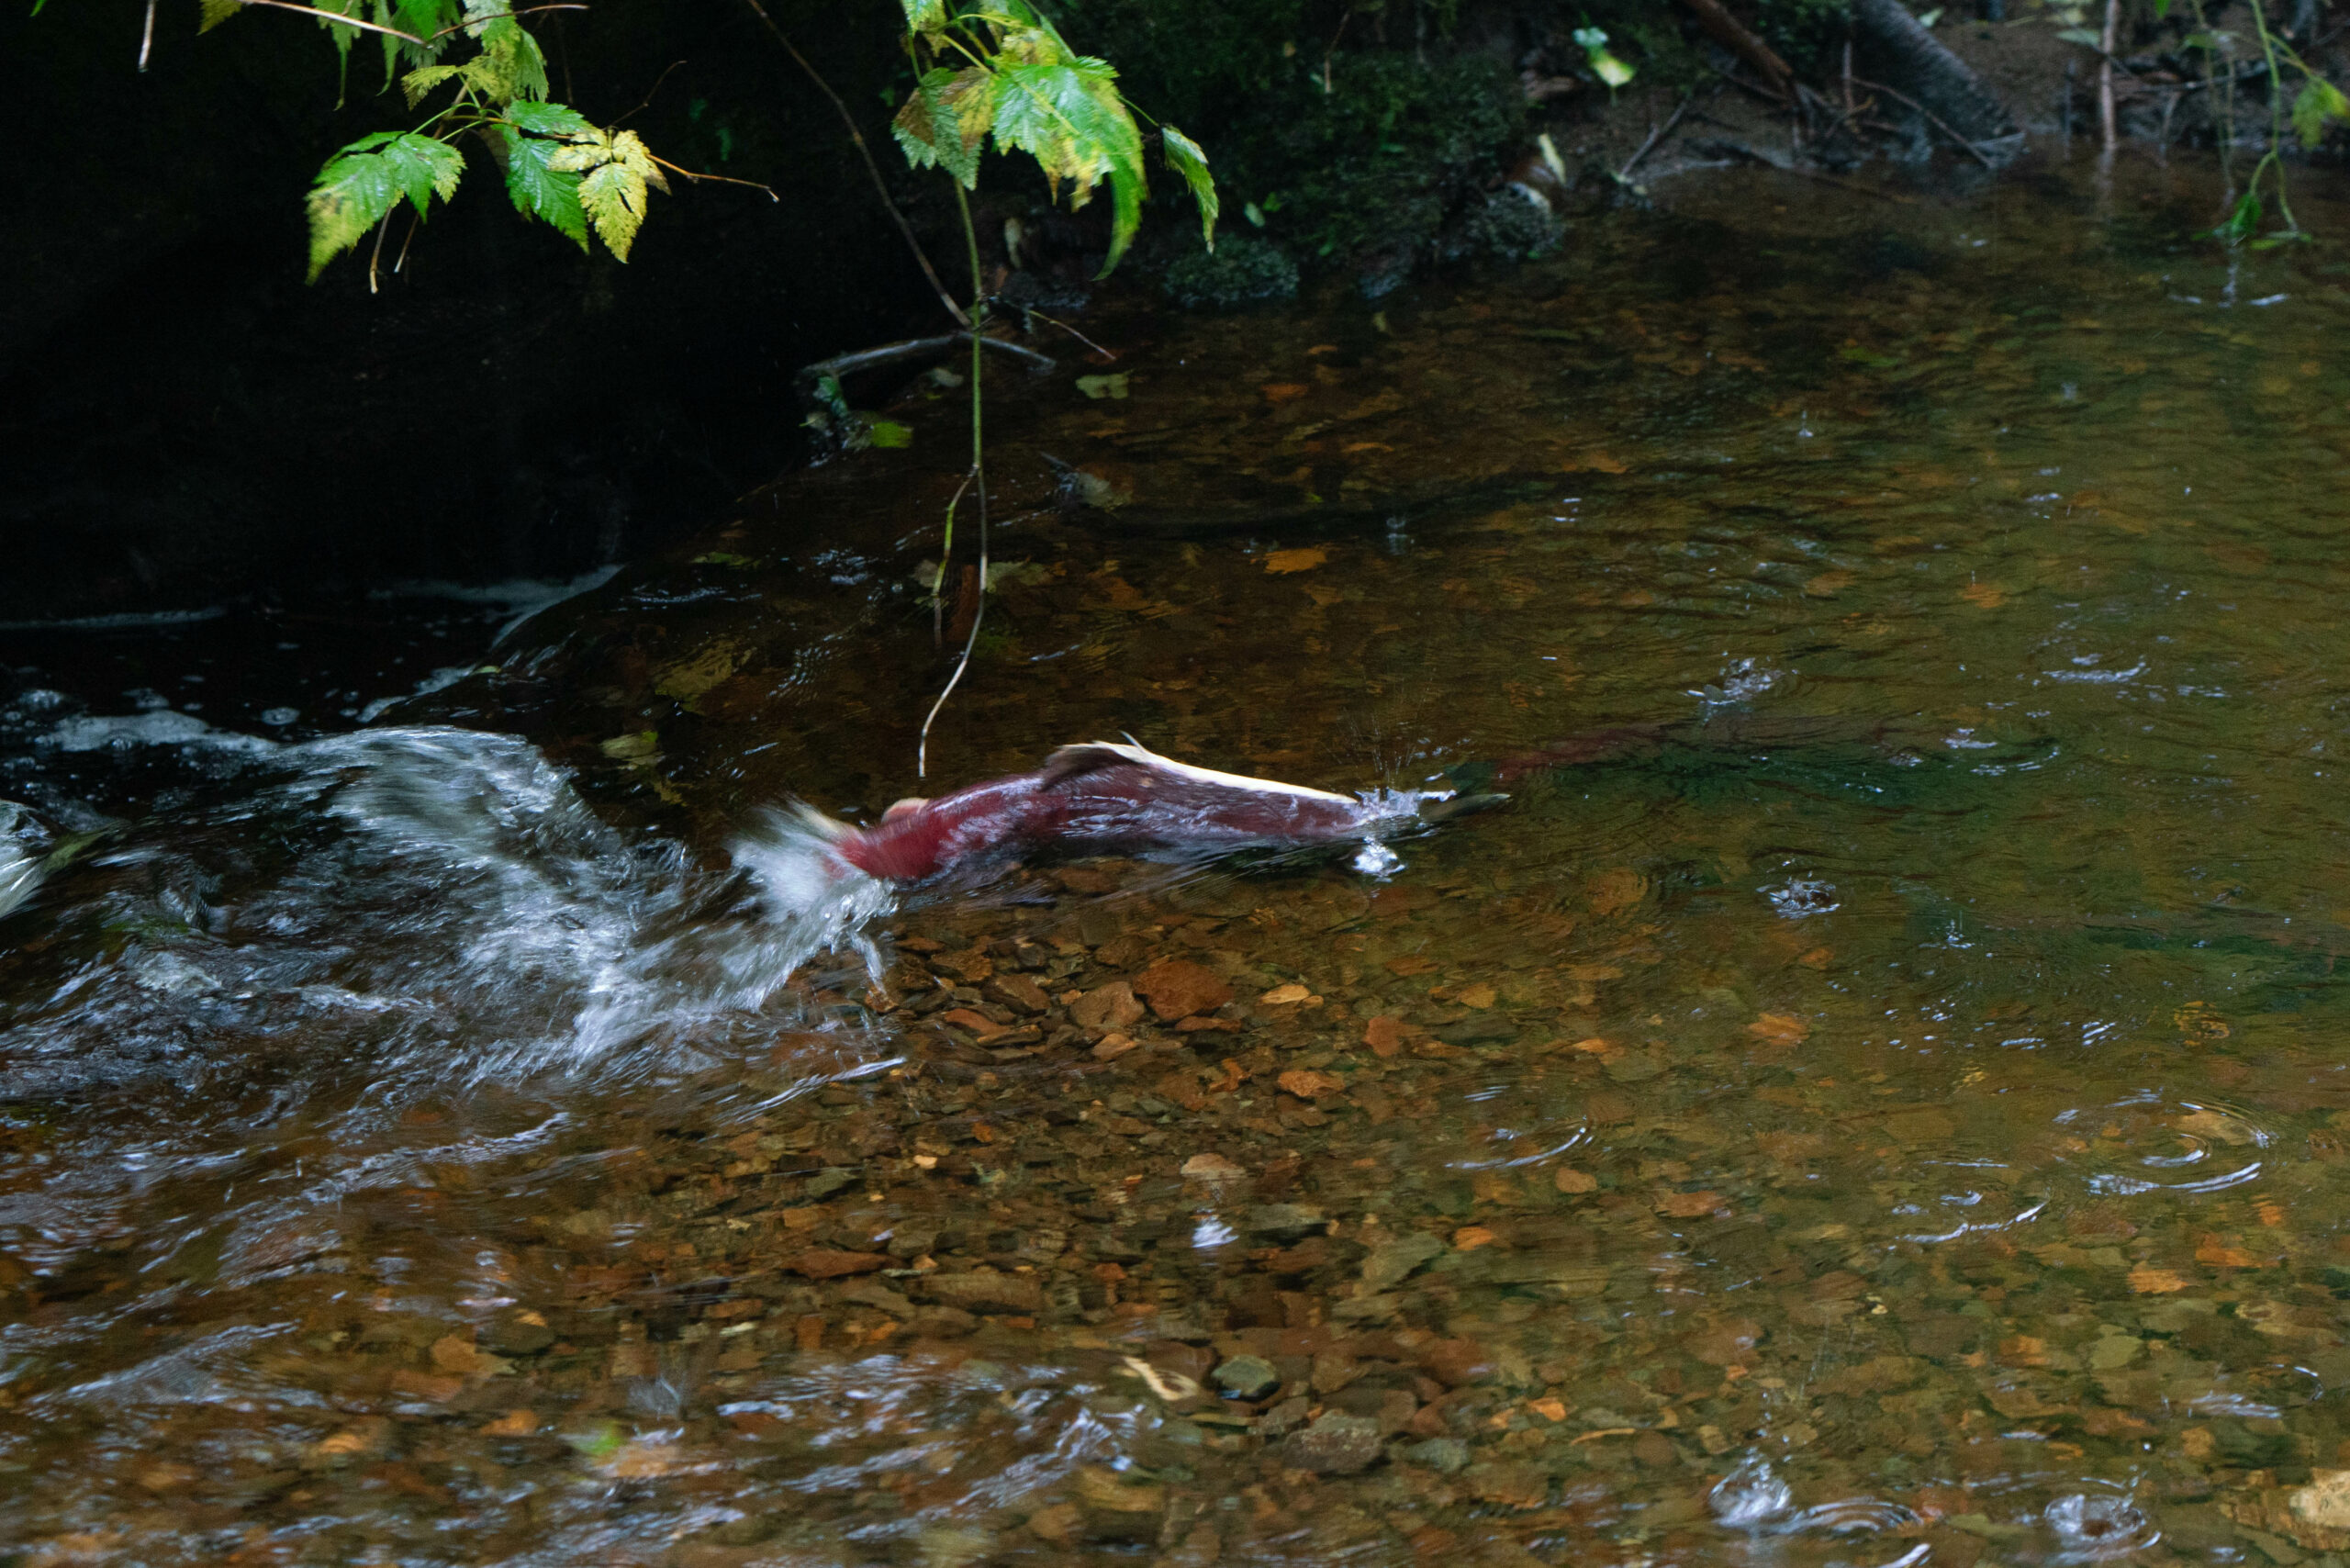 A sockeye salmon swimming upstream